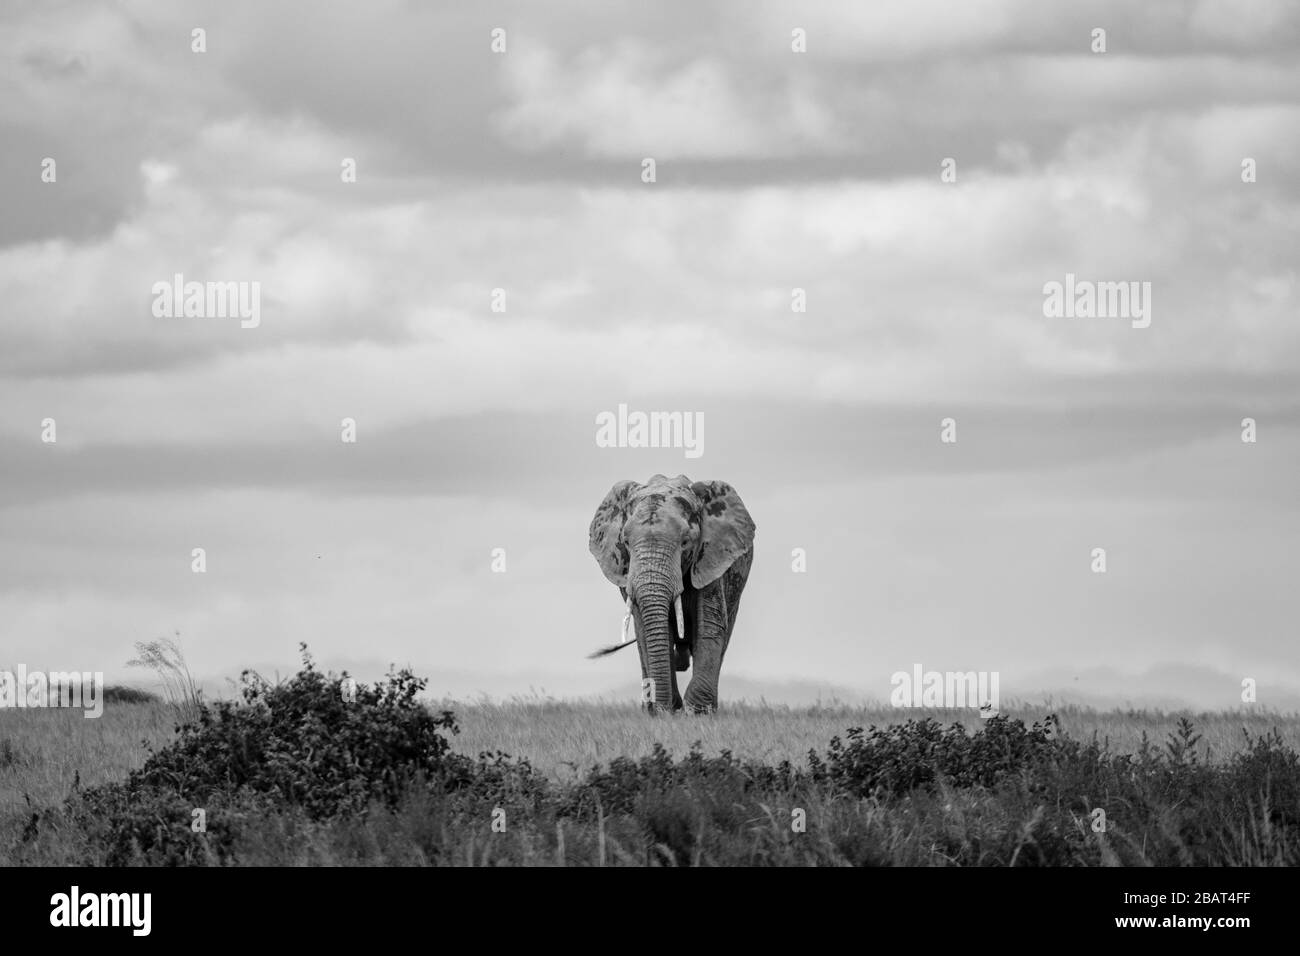 A lone Elephant walks across the plain in Amboseli National Park, Kenya, in Black and White Stock Photo